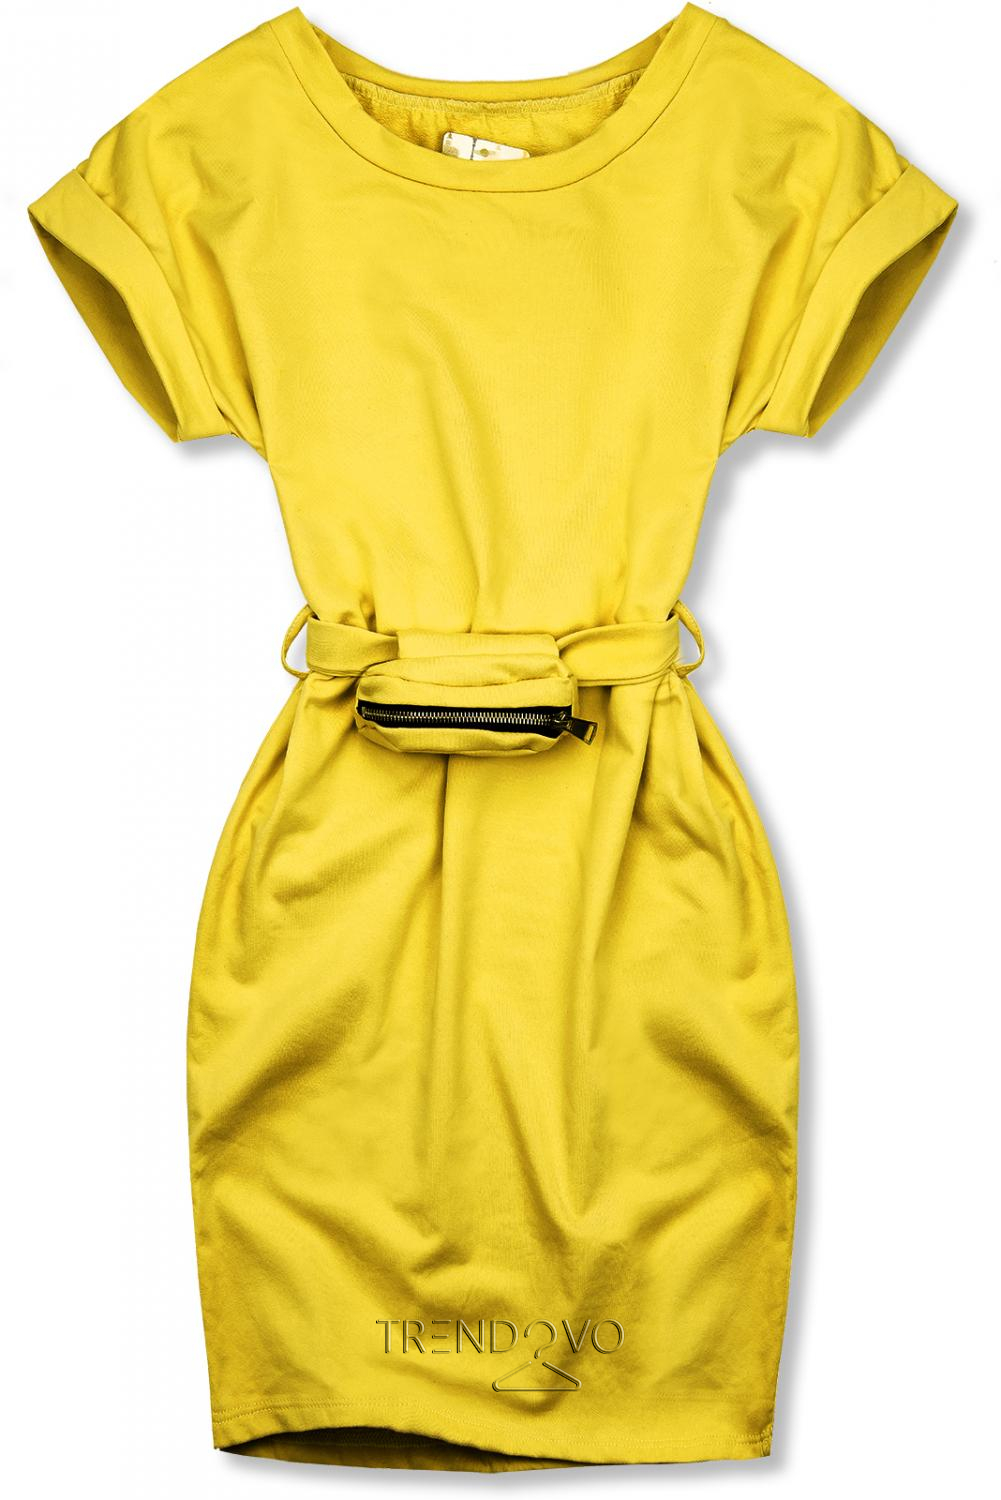 Žlté basic šaty s malou taškou v páse